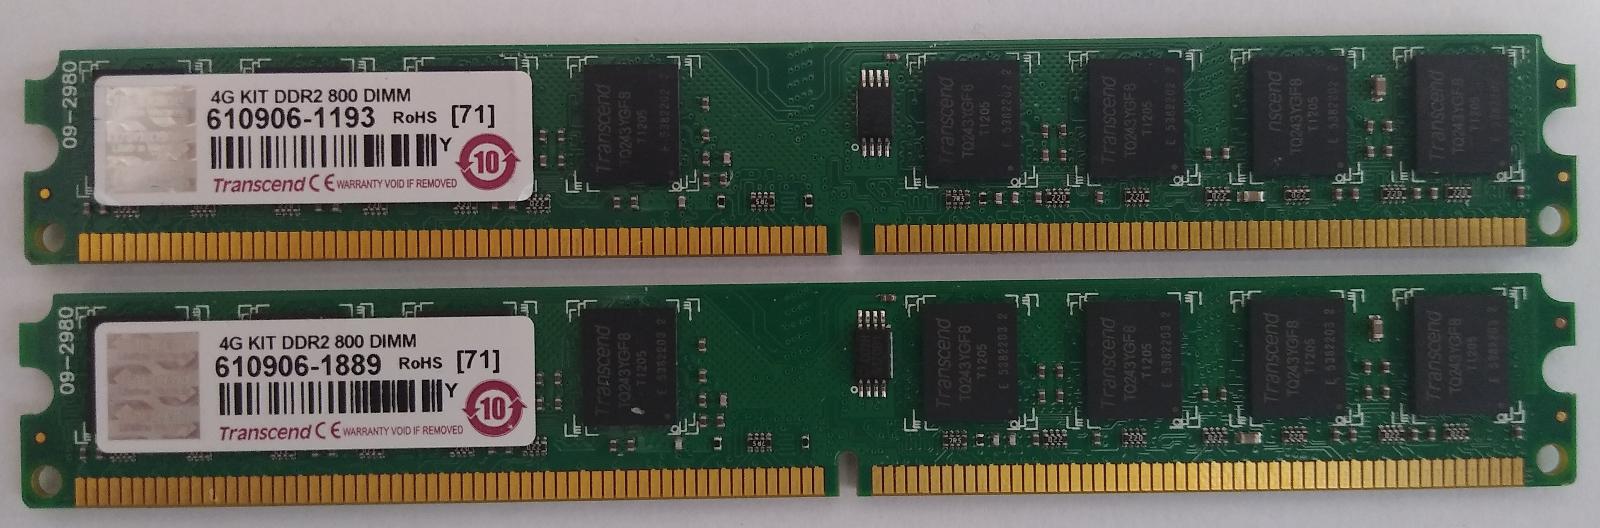 8GB RAM Transcend (4GB + 4GB) - DDR2 800 DIMM - Počítače a hry